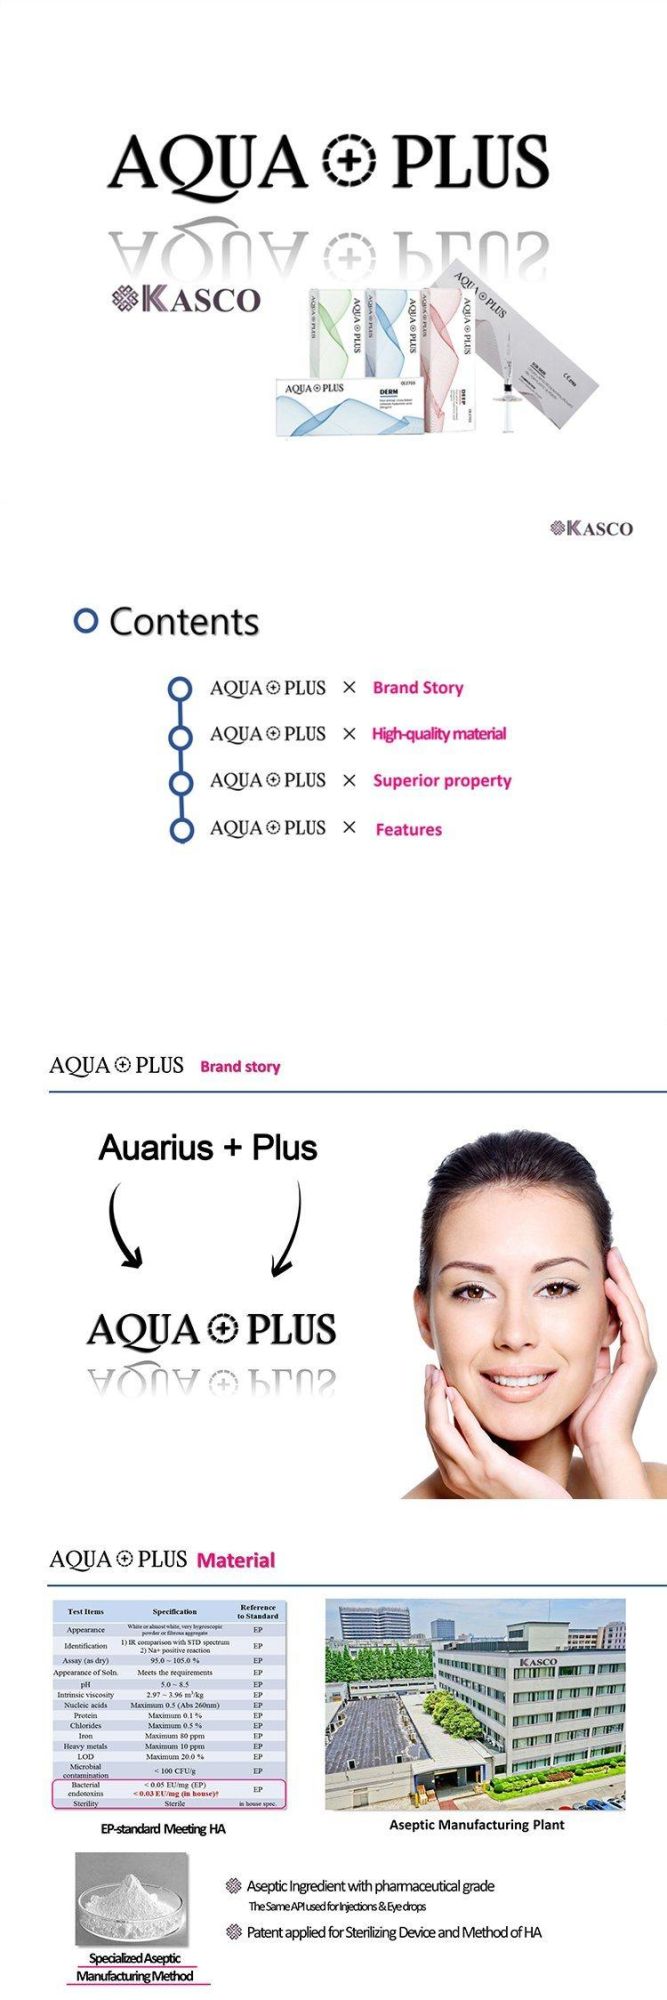 Aqua Plus High Quality Syringe Made by Bd Company 1ml Lip Filler Gel Injection Buy Hyaluronic Acid